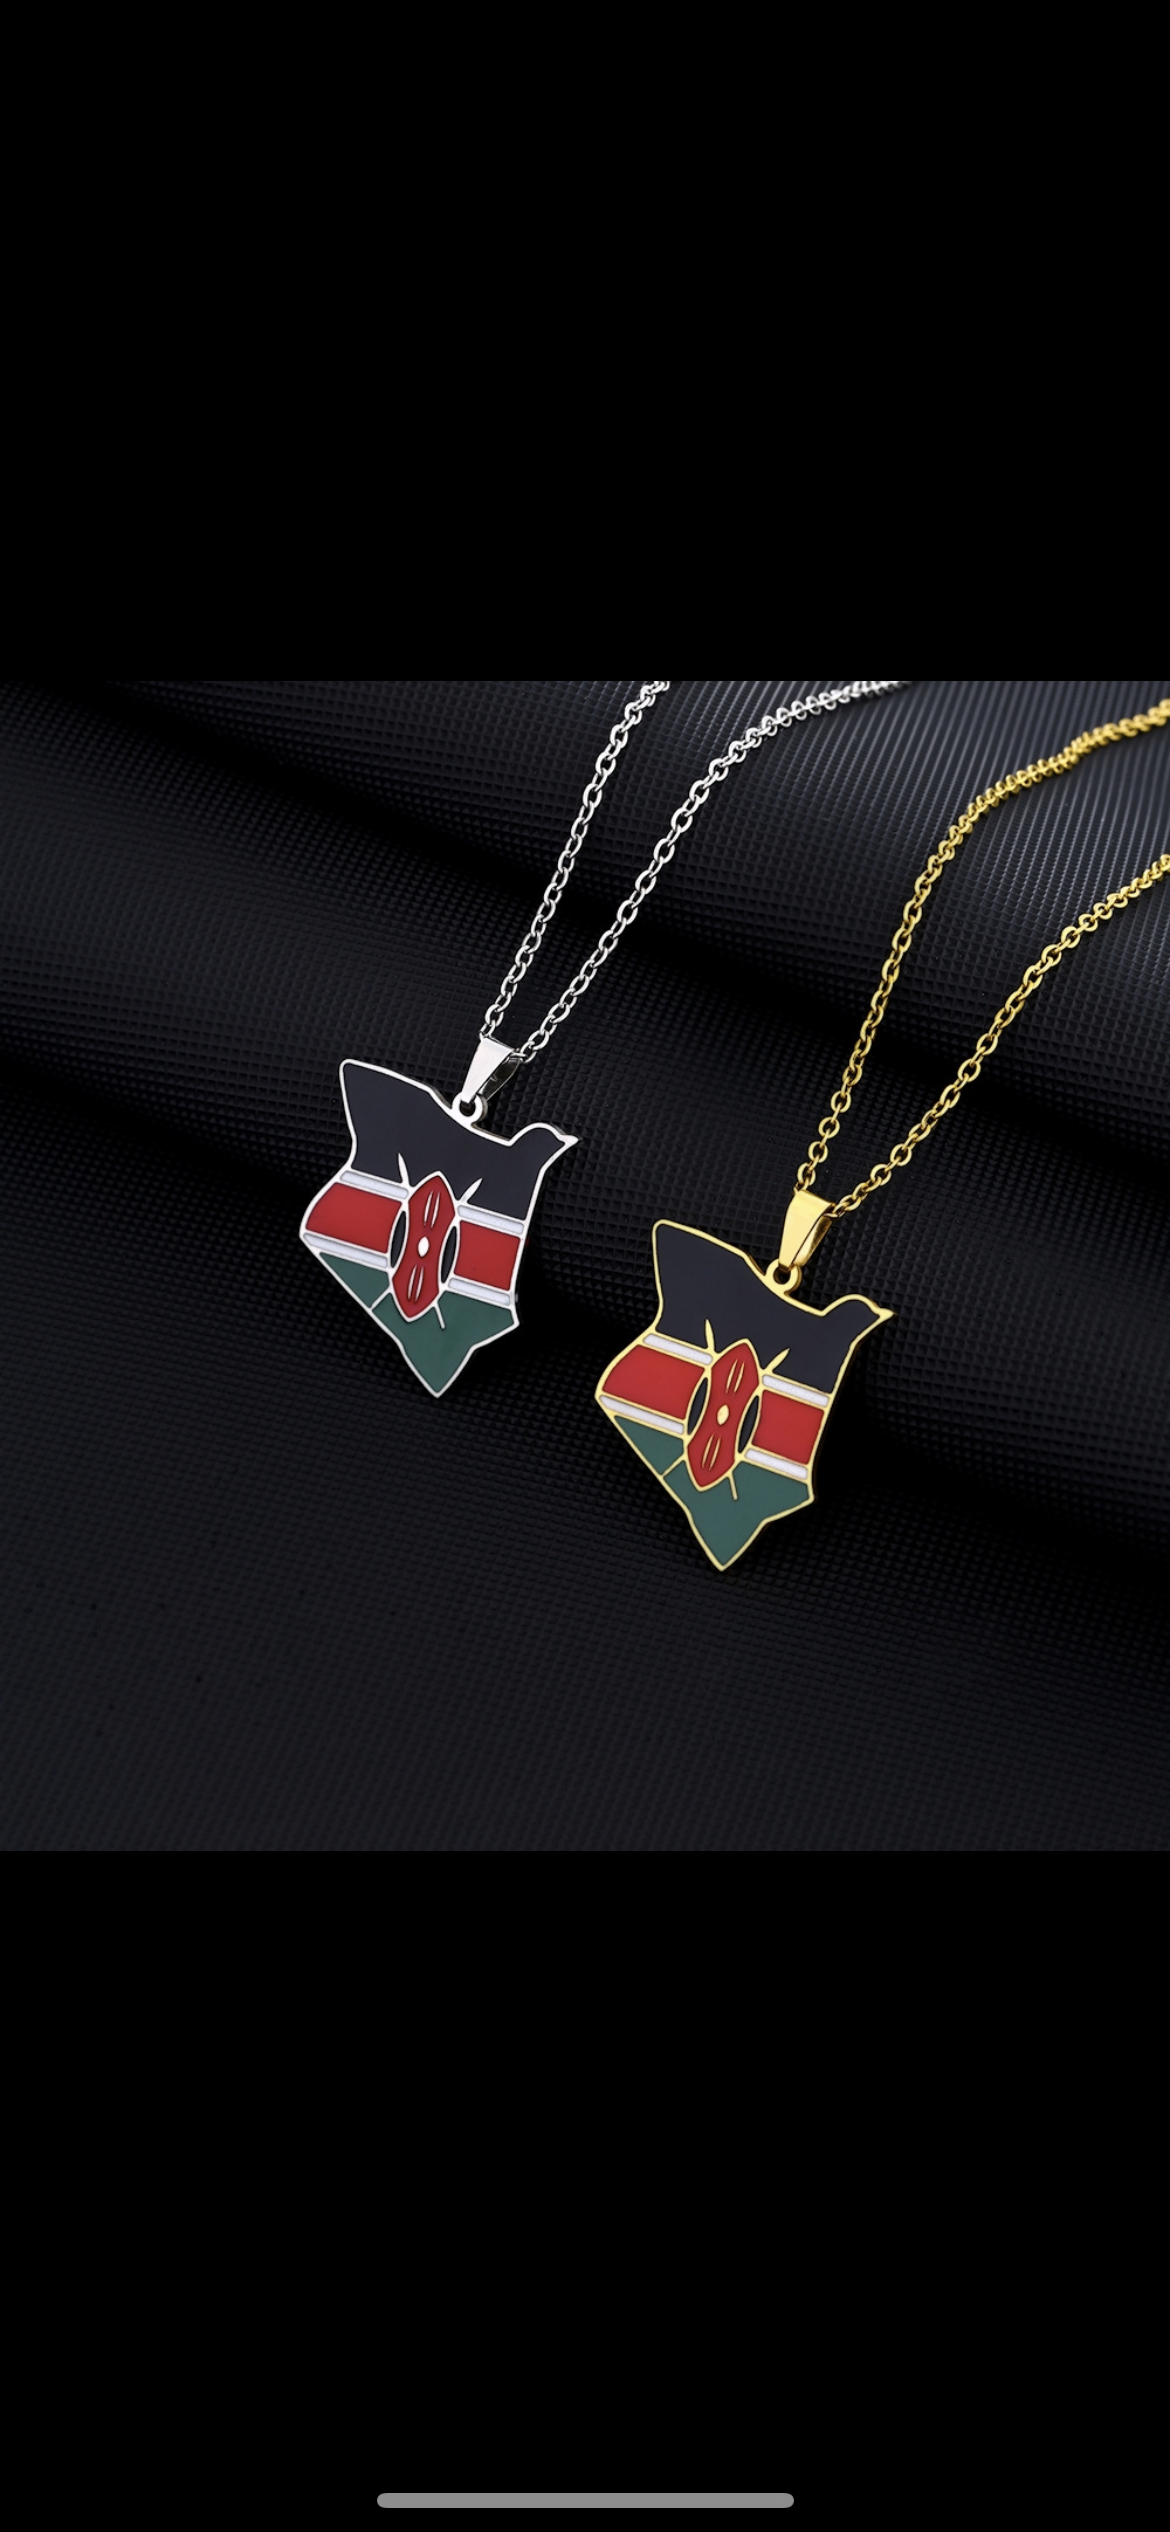 Necklace - Kenya 🇰🇪